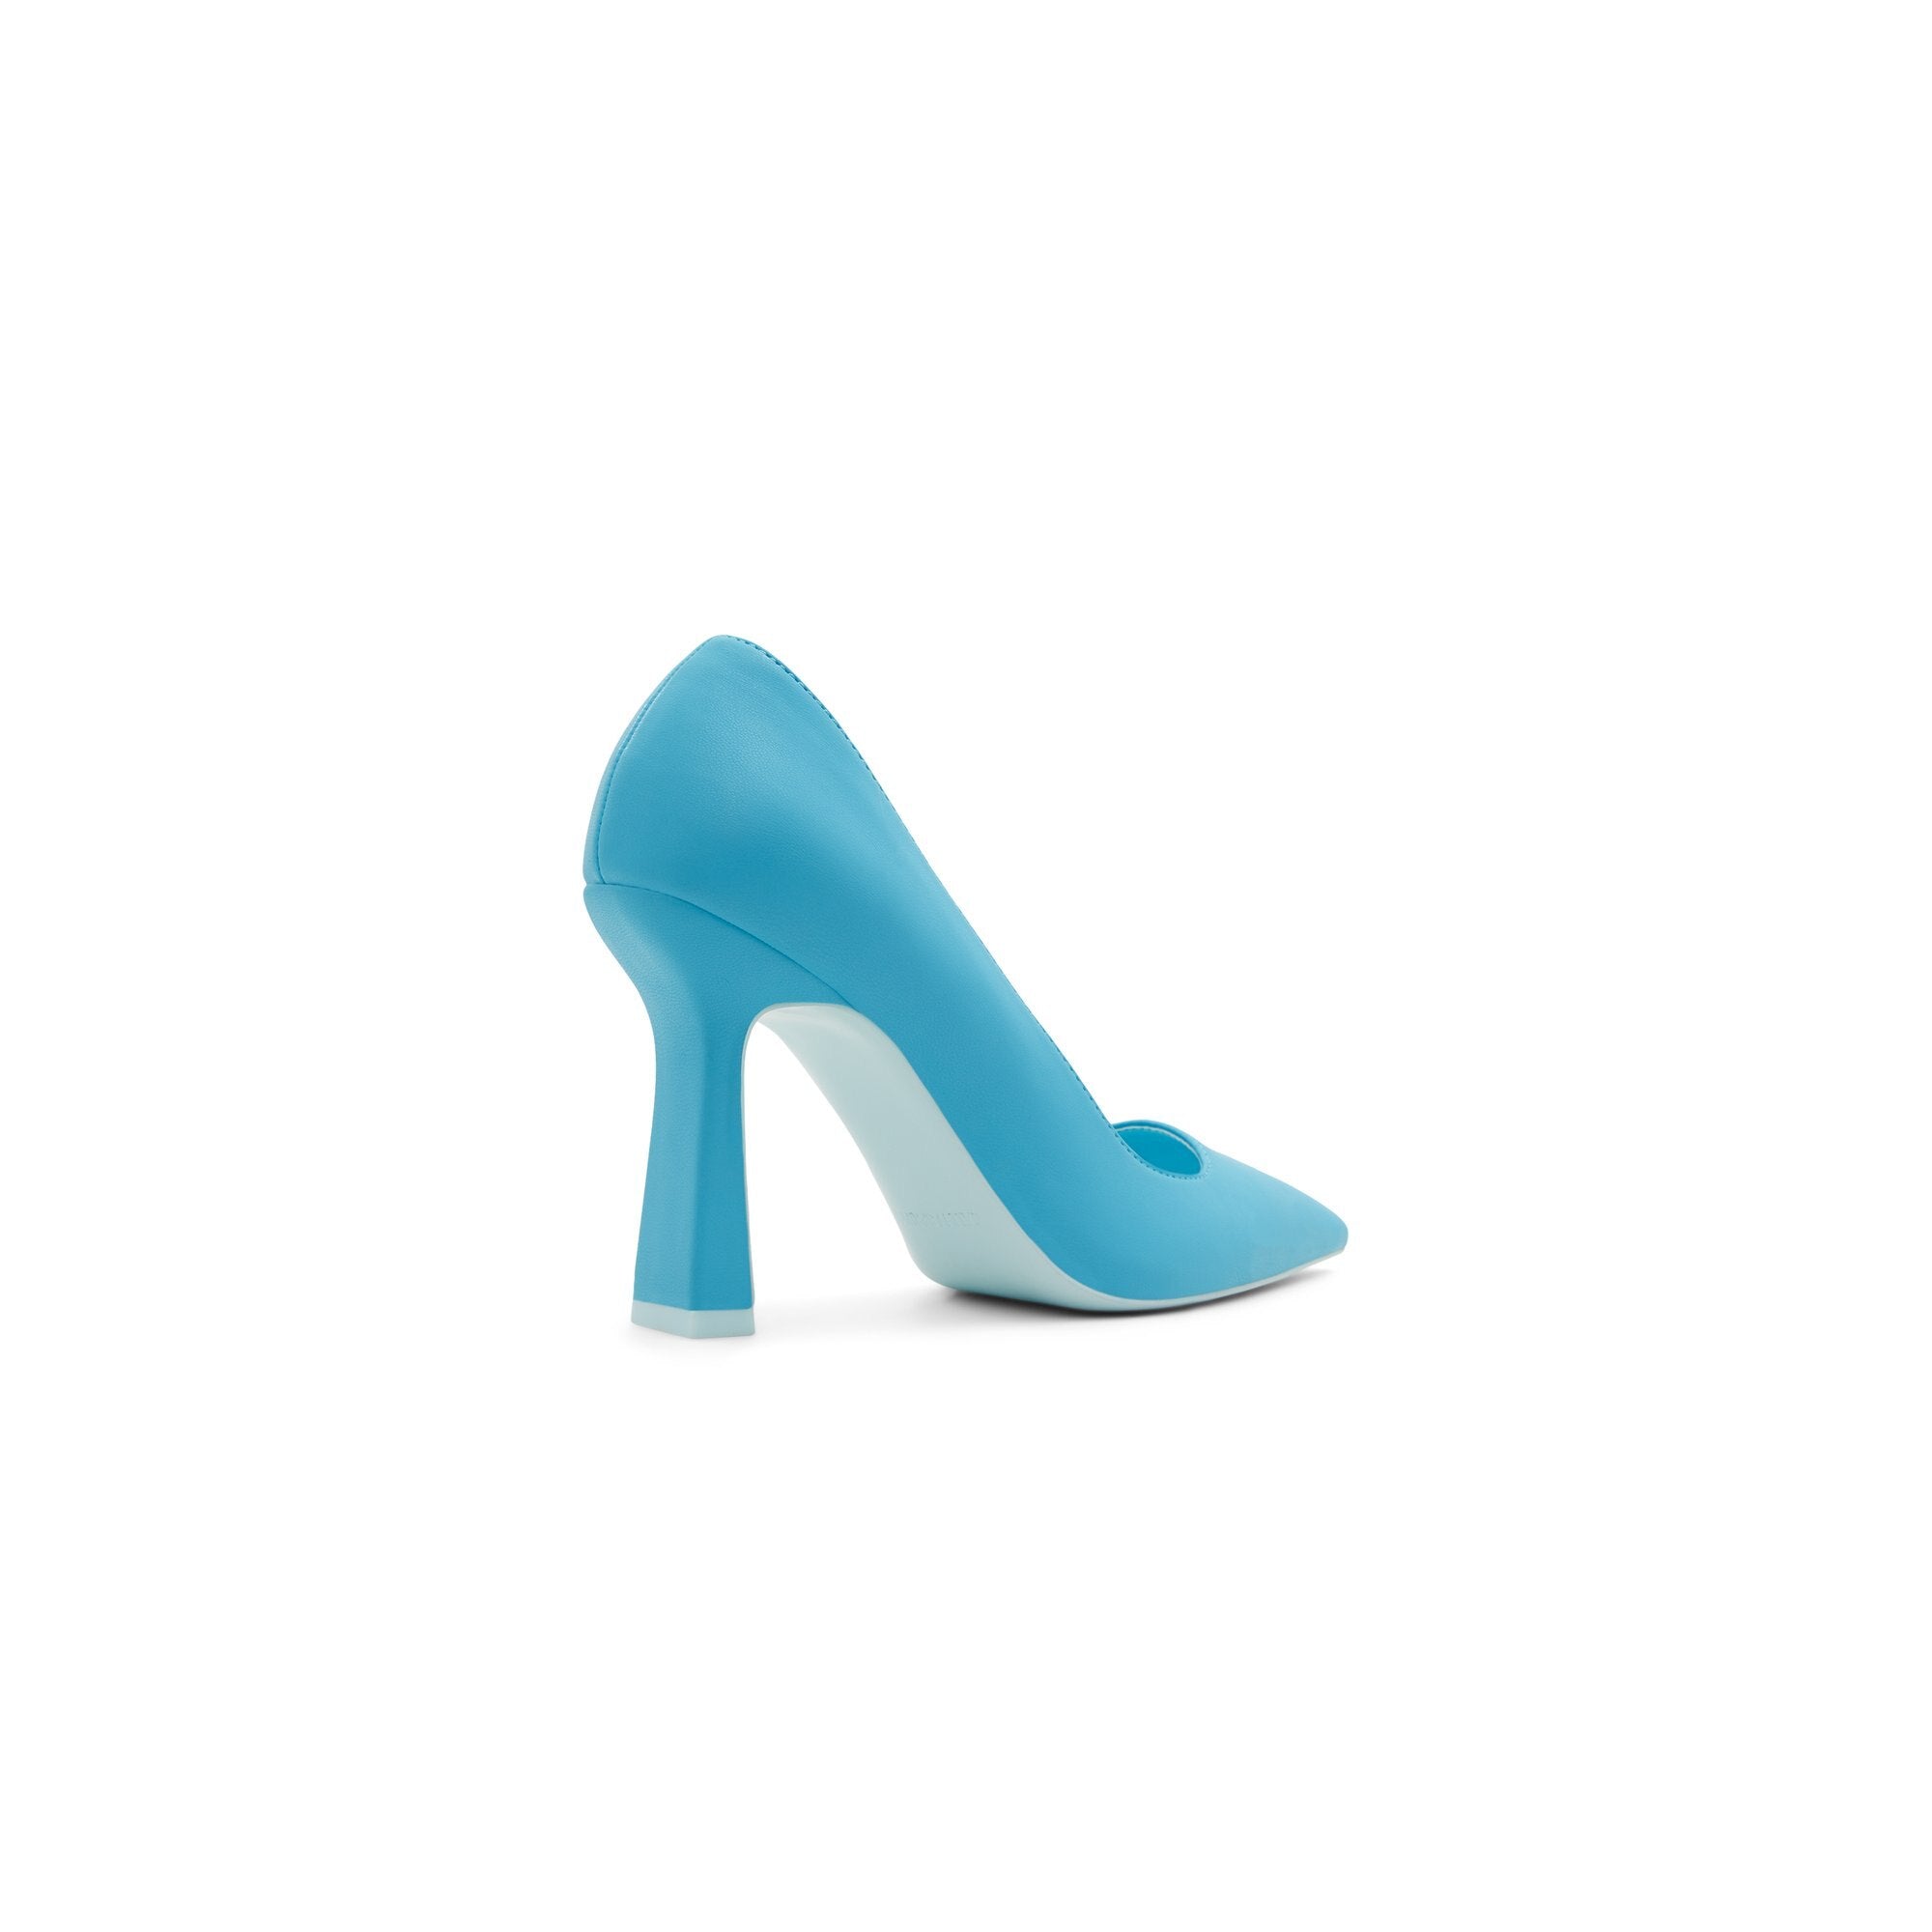 Promise Delma Turquoise Multi Color Block High Heel Sandals - $35.00 - Lulus